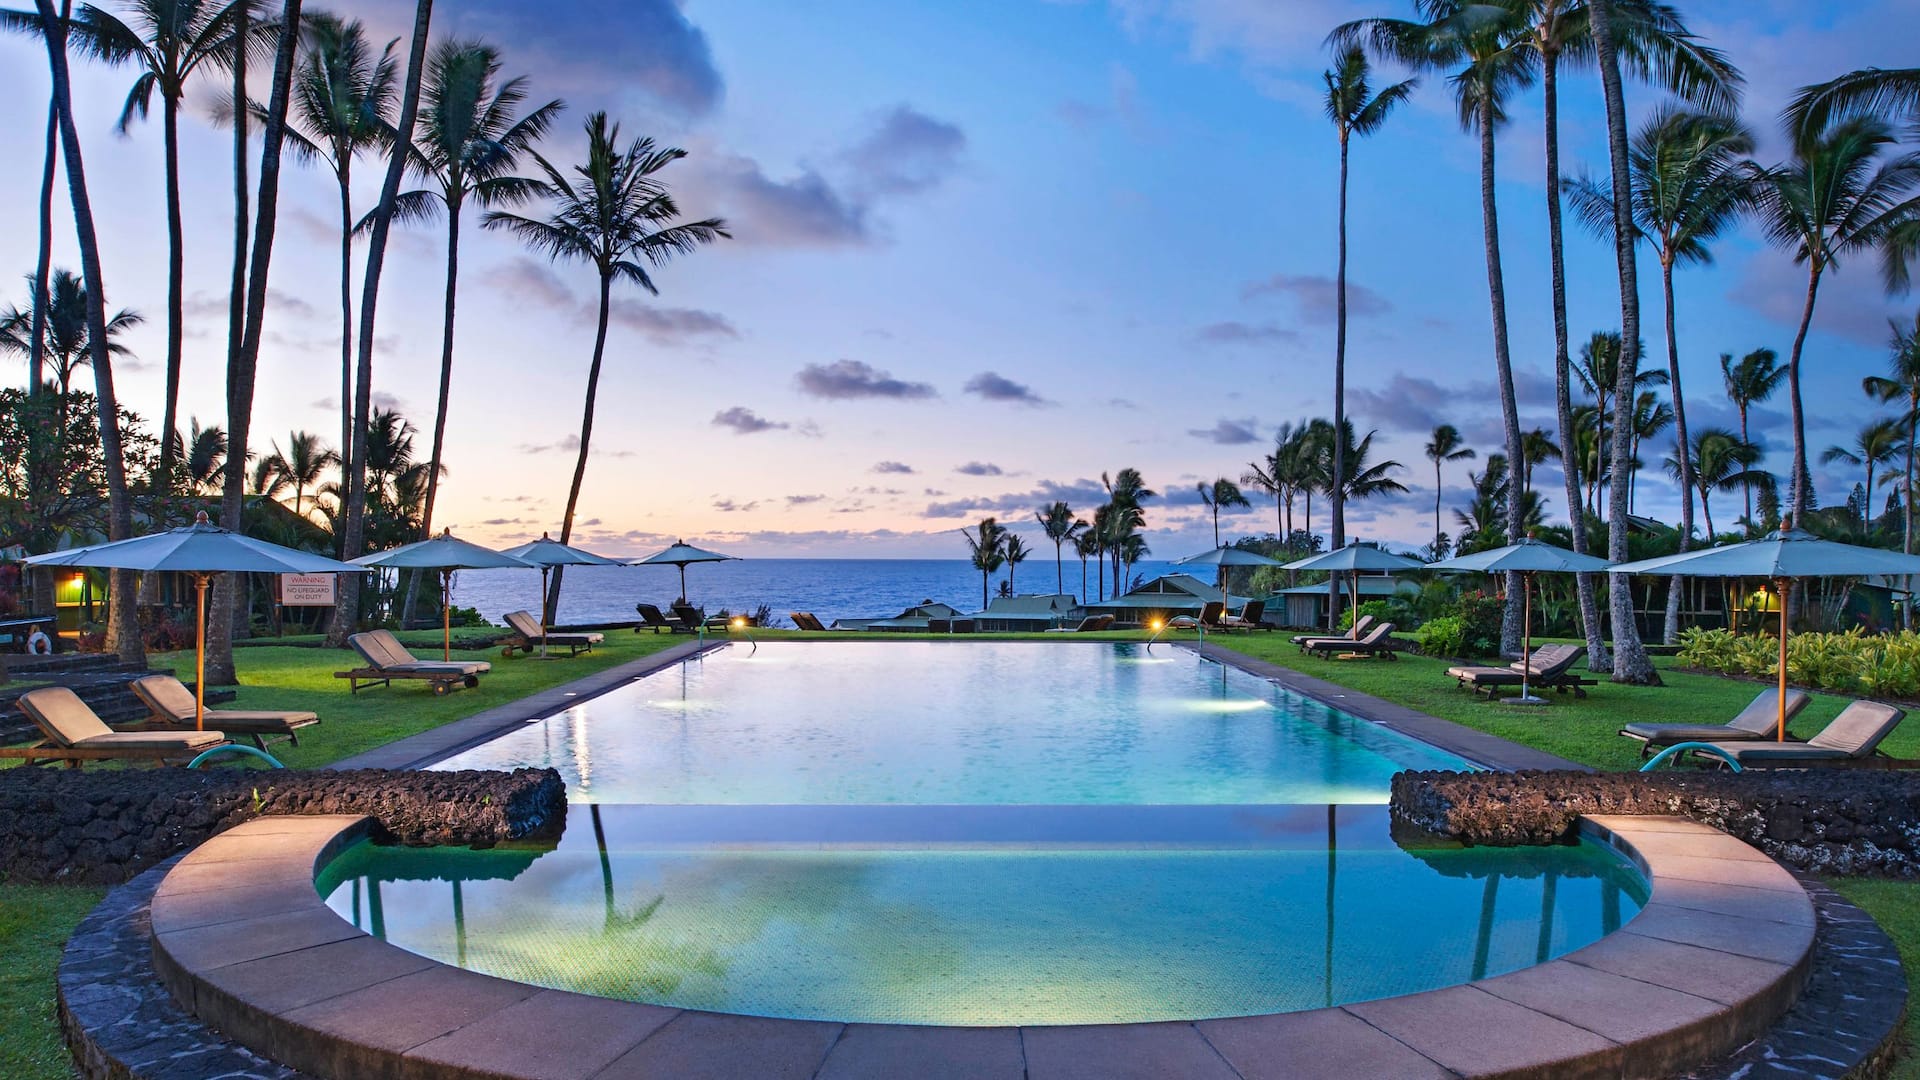 Hotel swimming pool in Hana, Maui